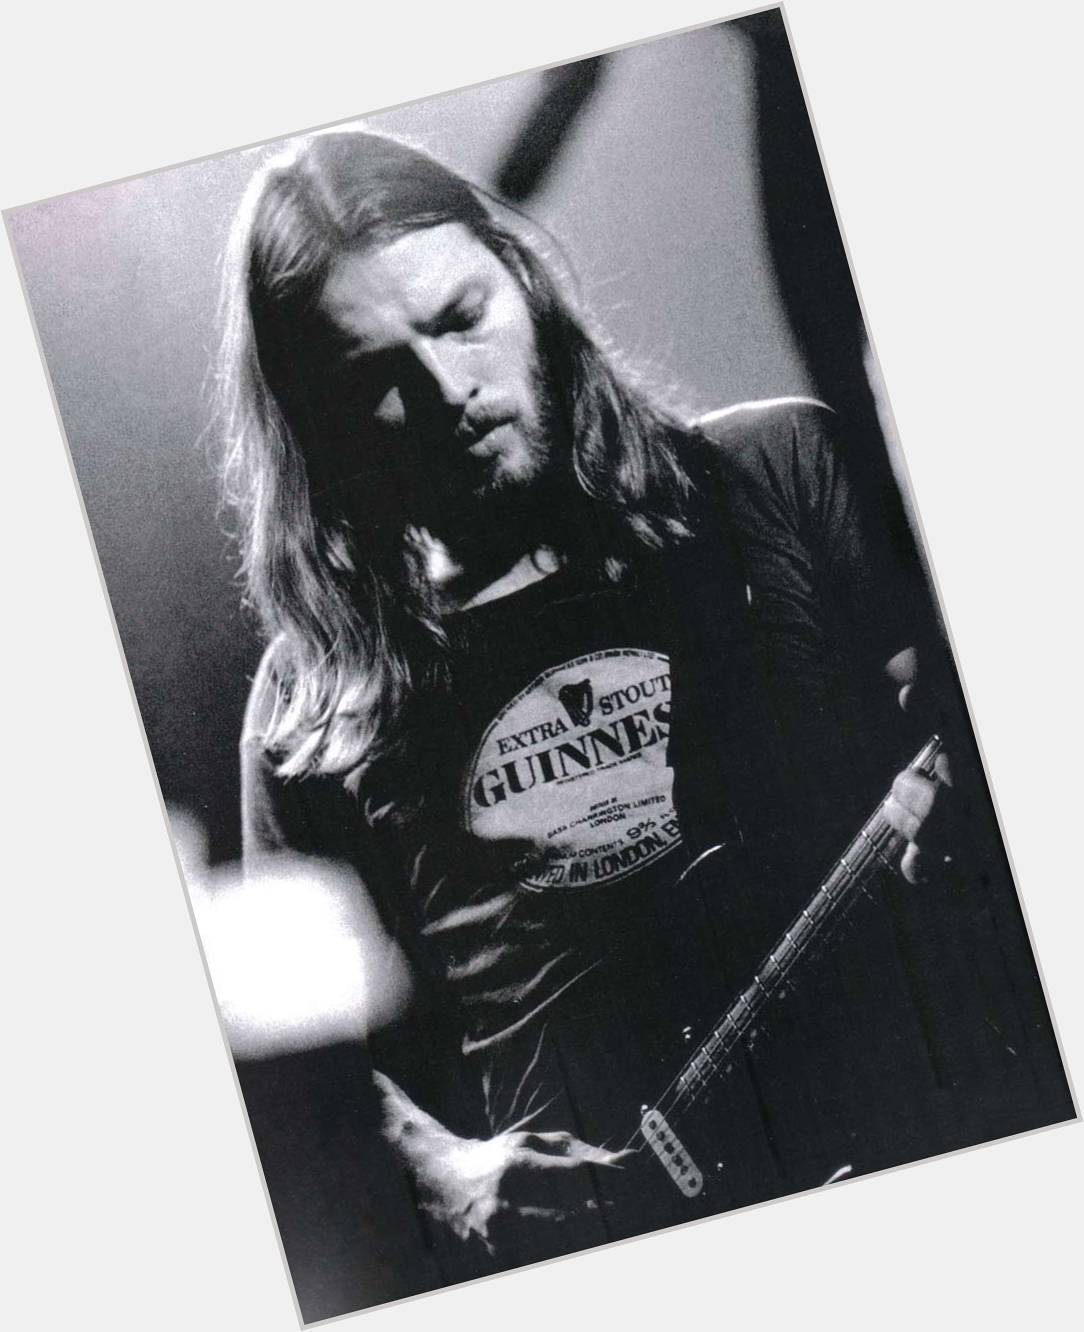 ¡Happy Birthday, brother David Gilmour! 